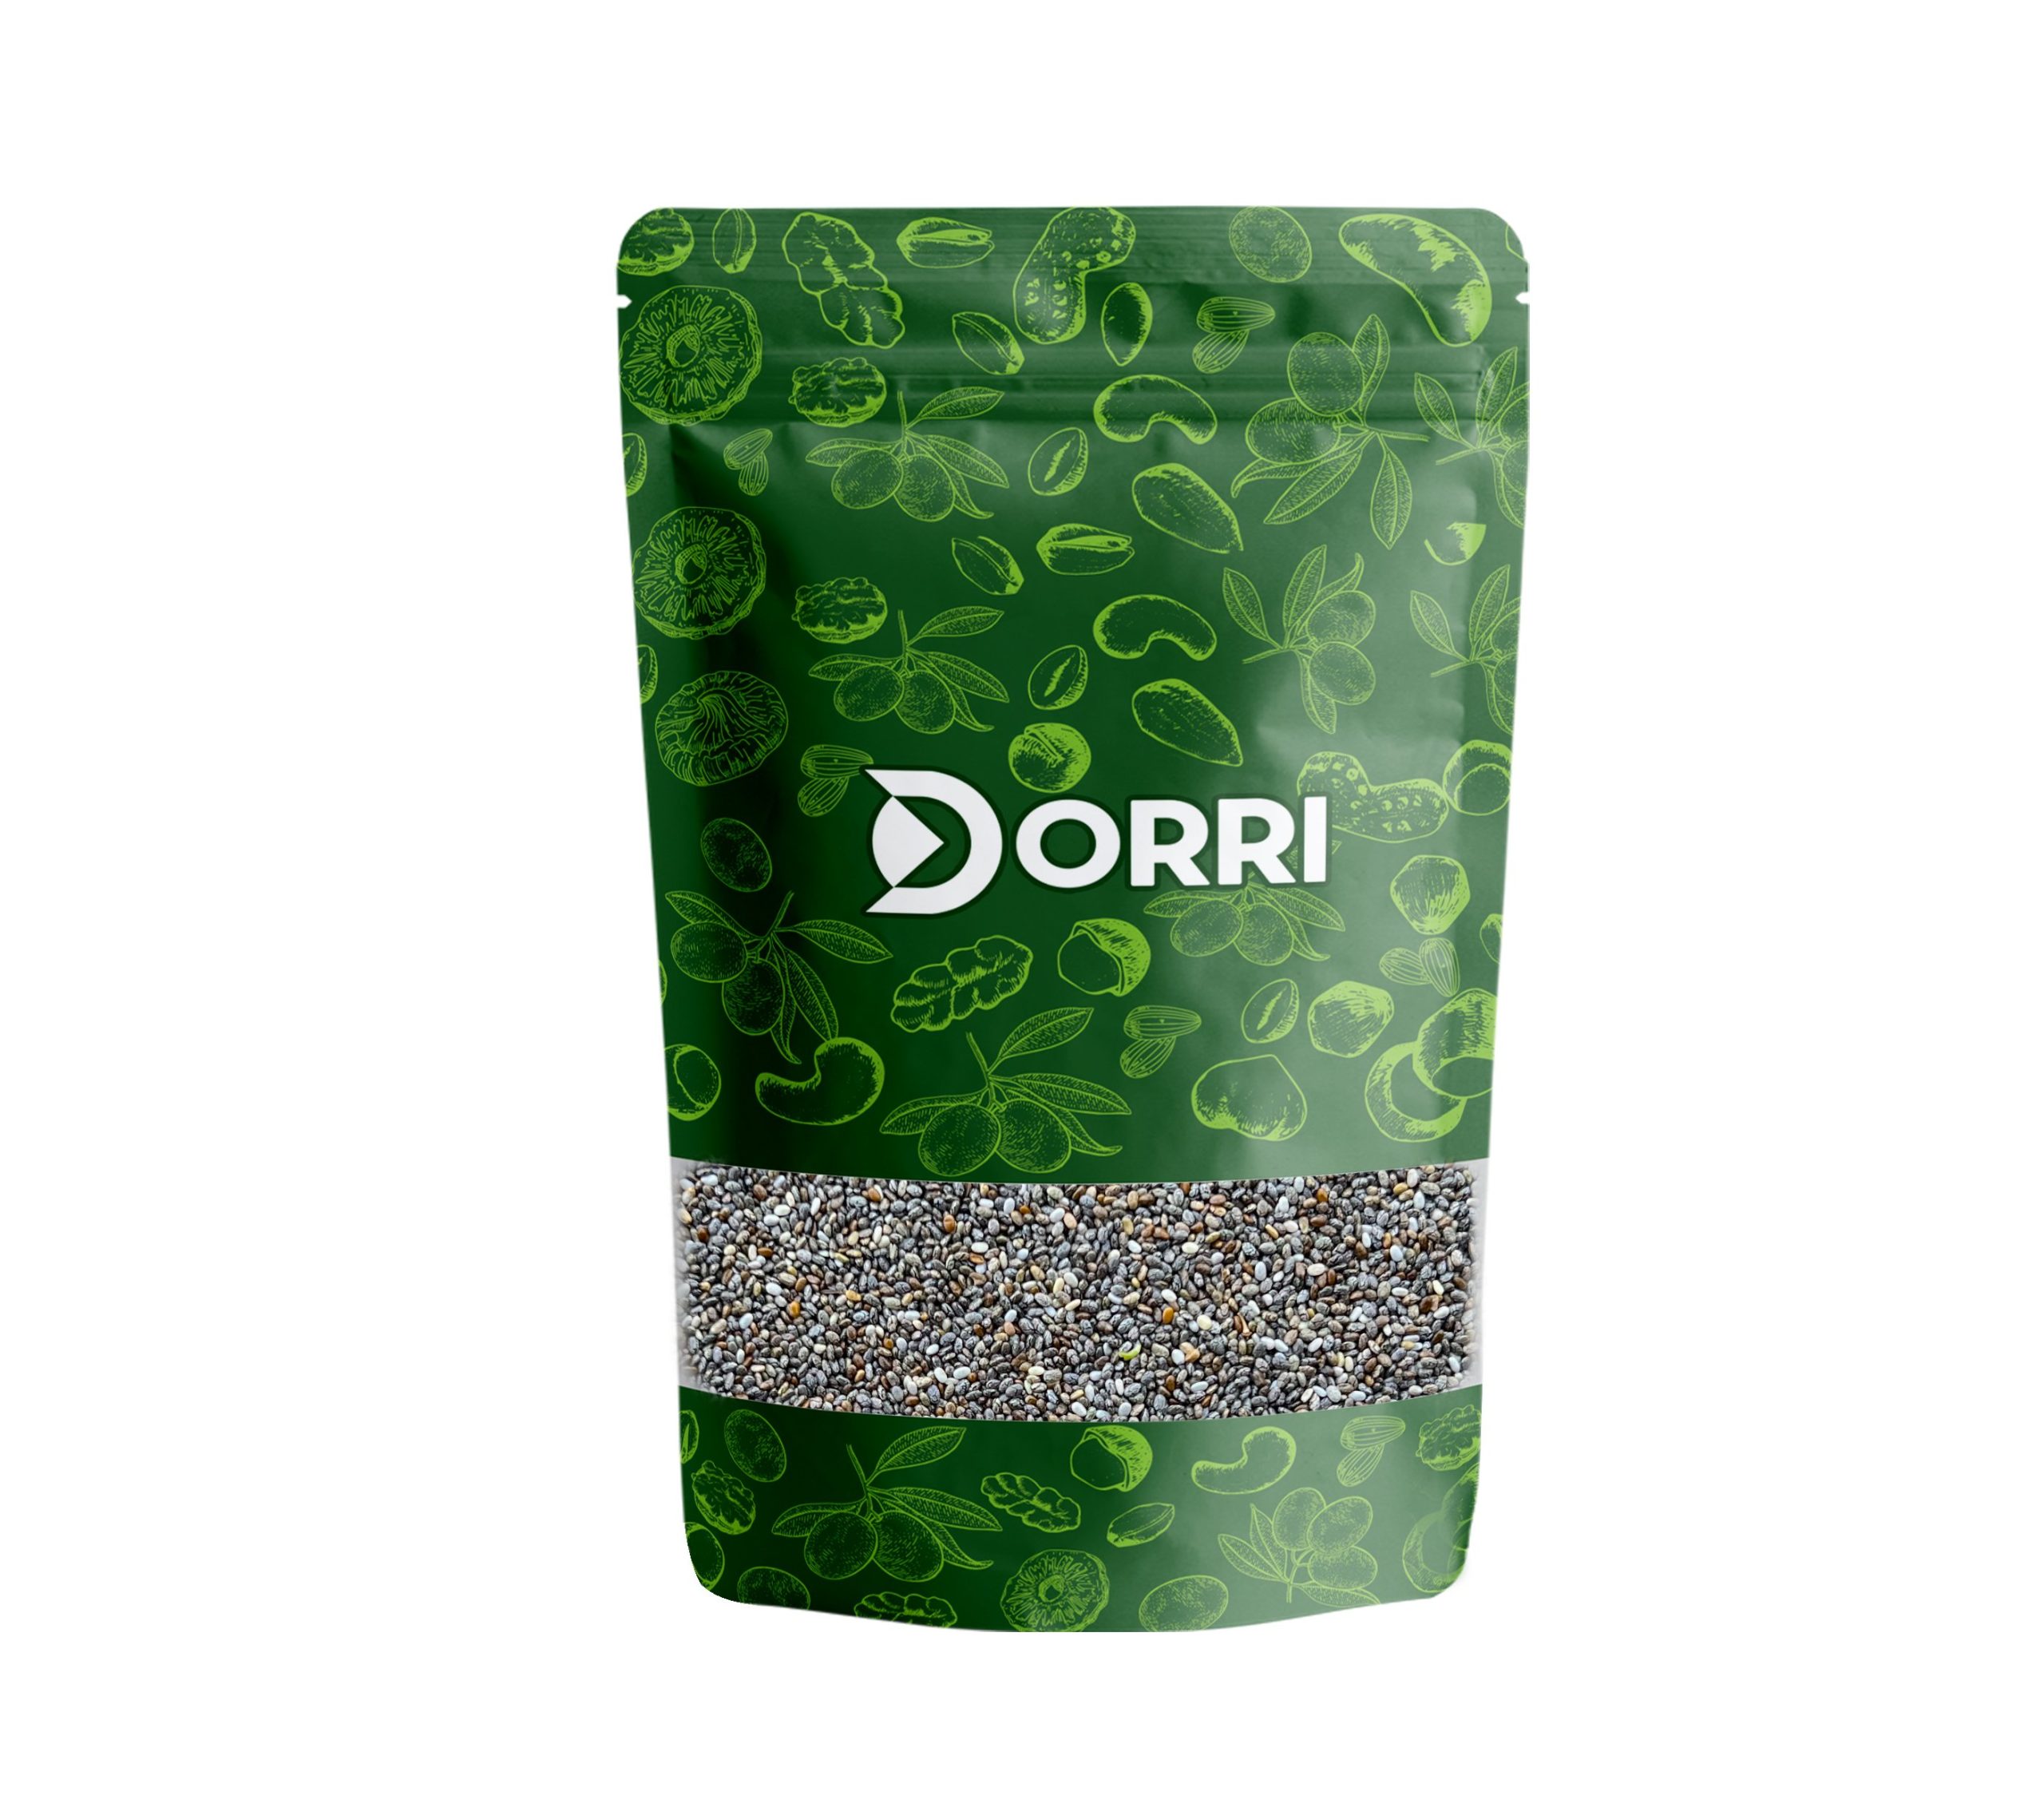 Dorri - Chia Seeds